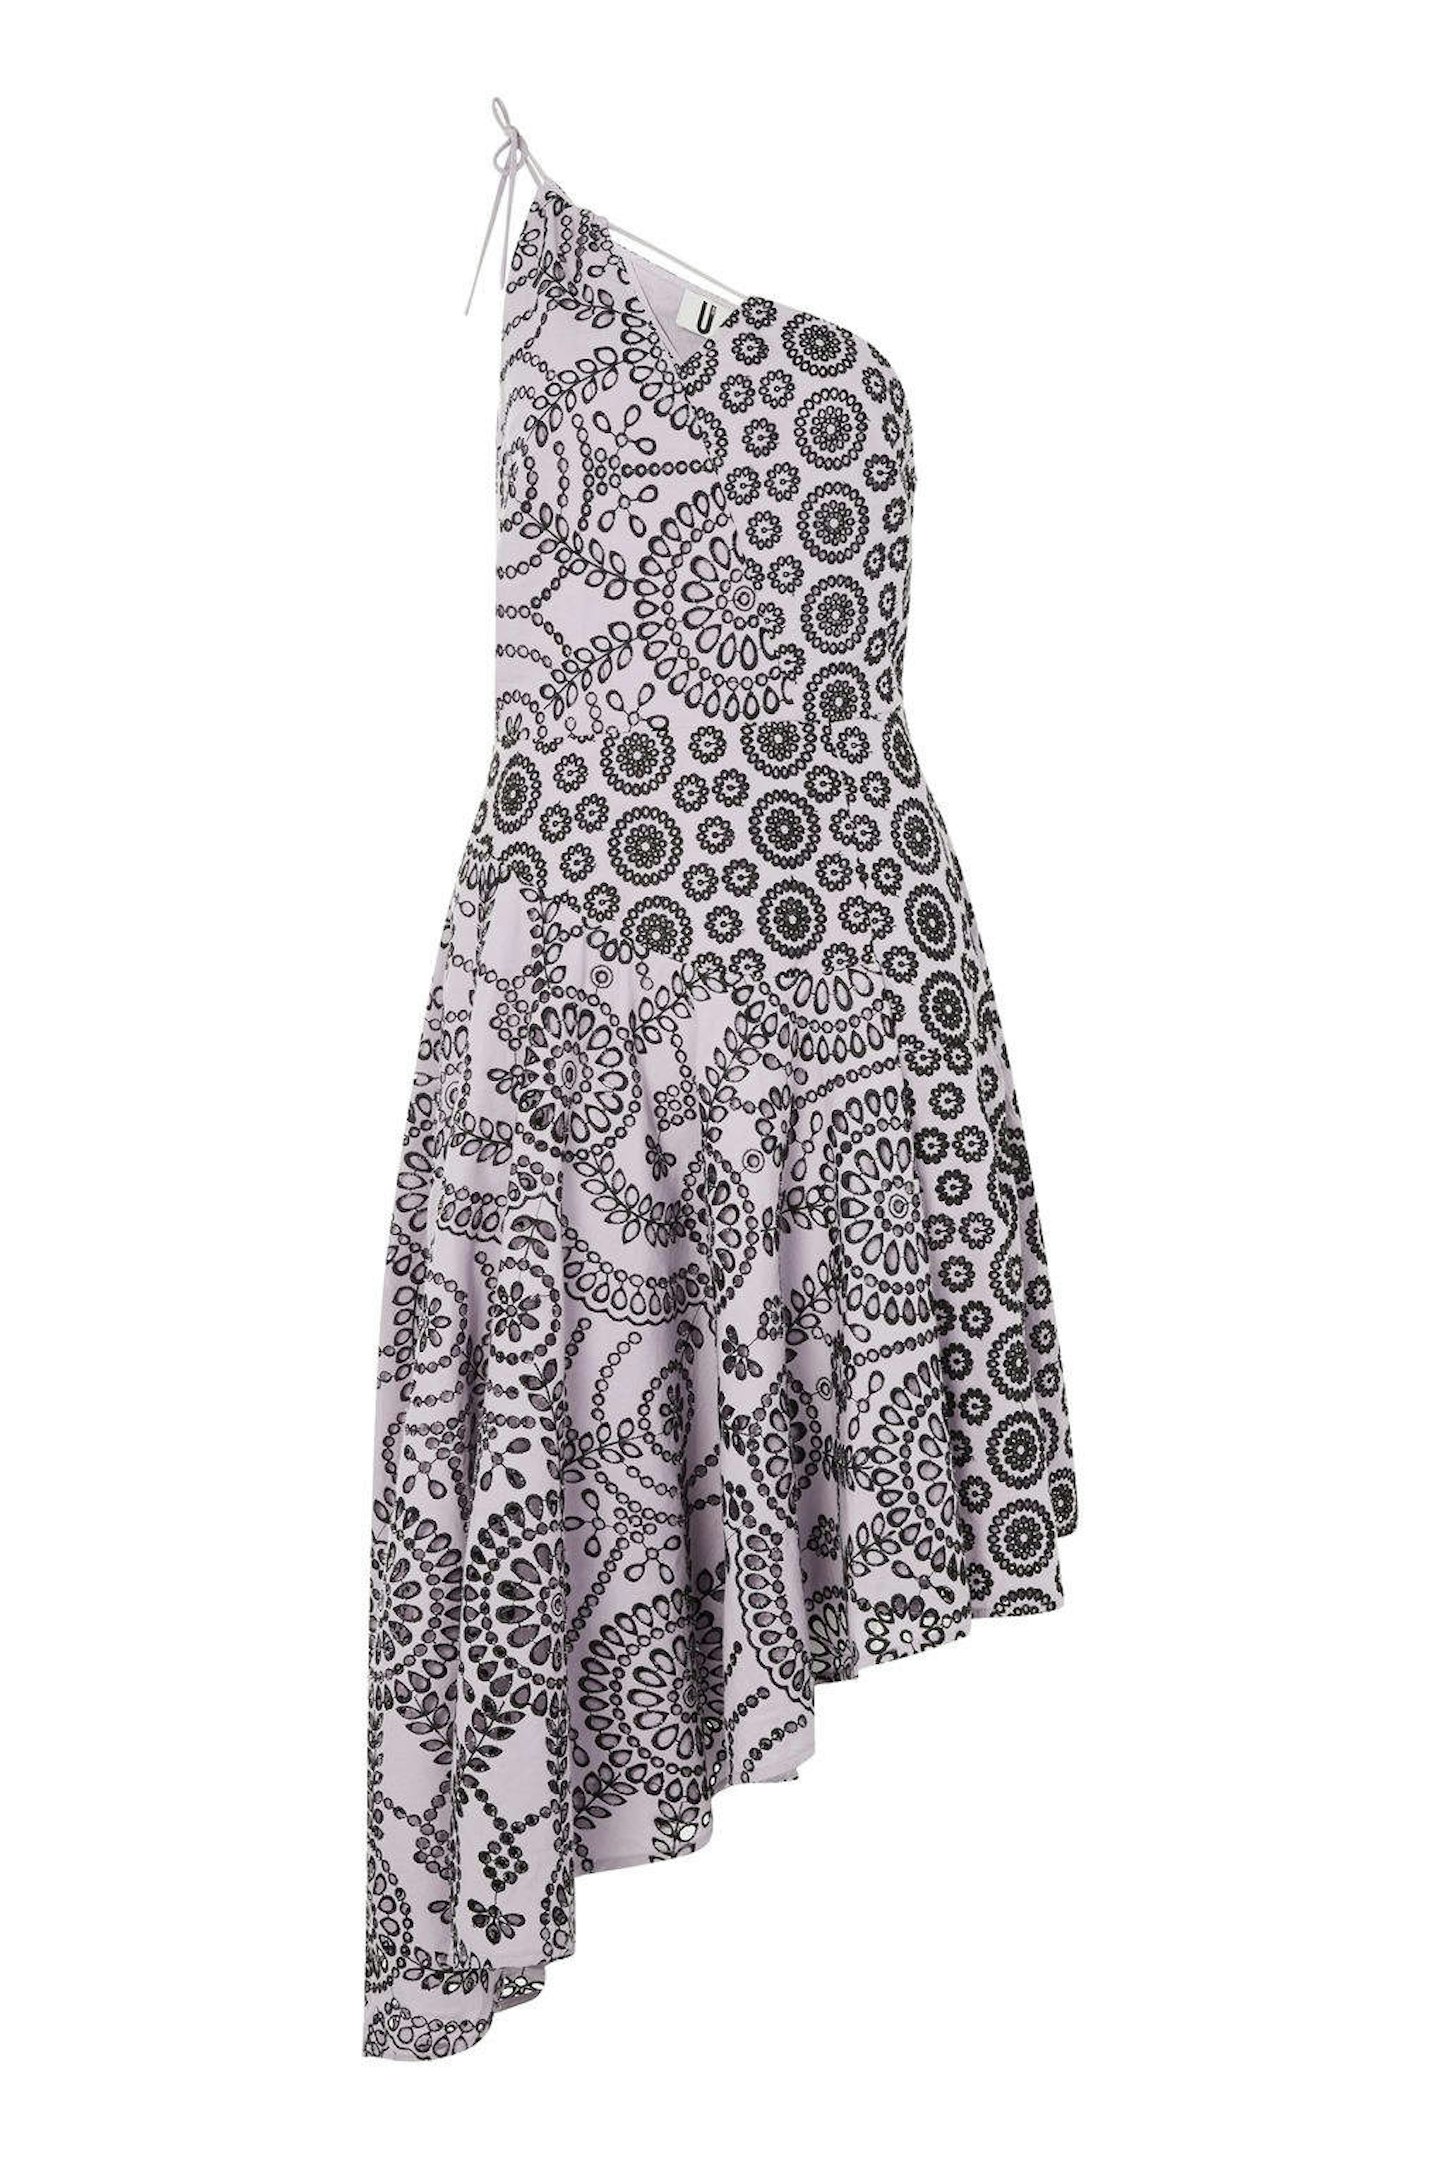 topshop-unique-printed-dresses-shopping